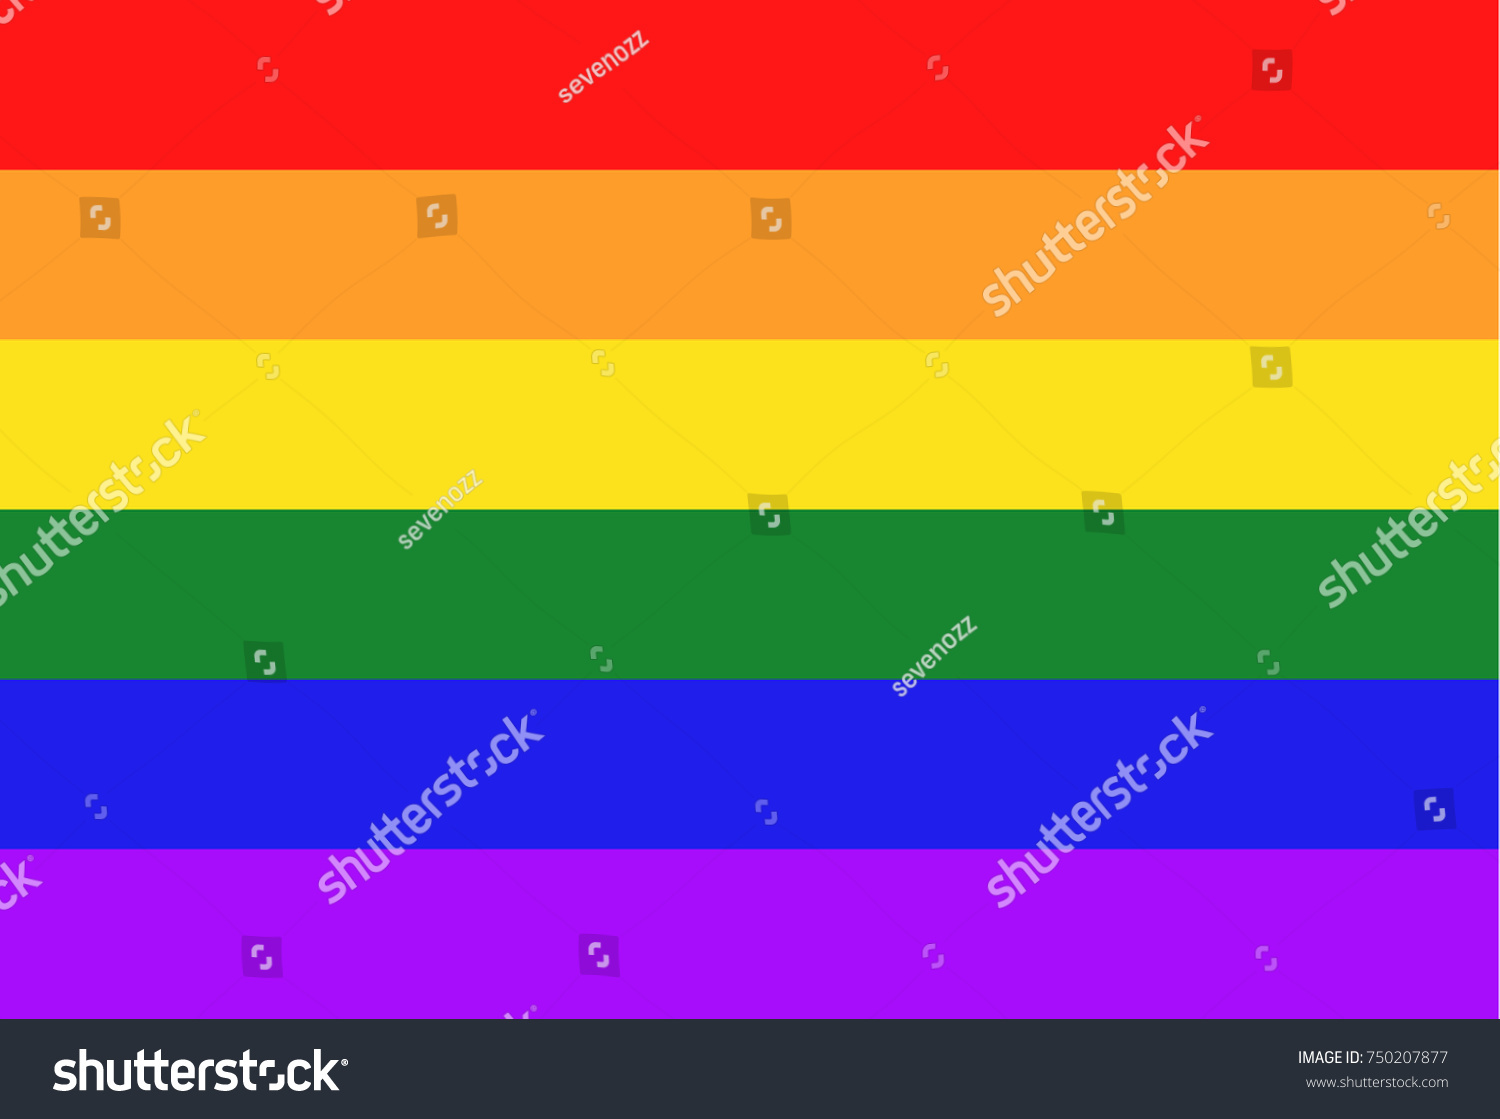 Pride Flag Lgbt Sign Lesbian Gay: стоковая векторная графика (без лицензион...